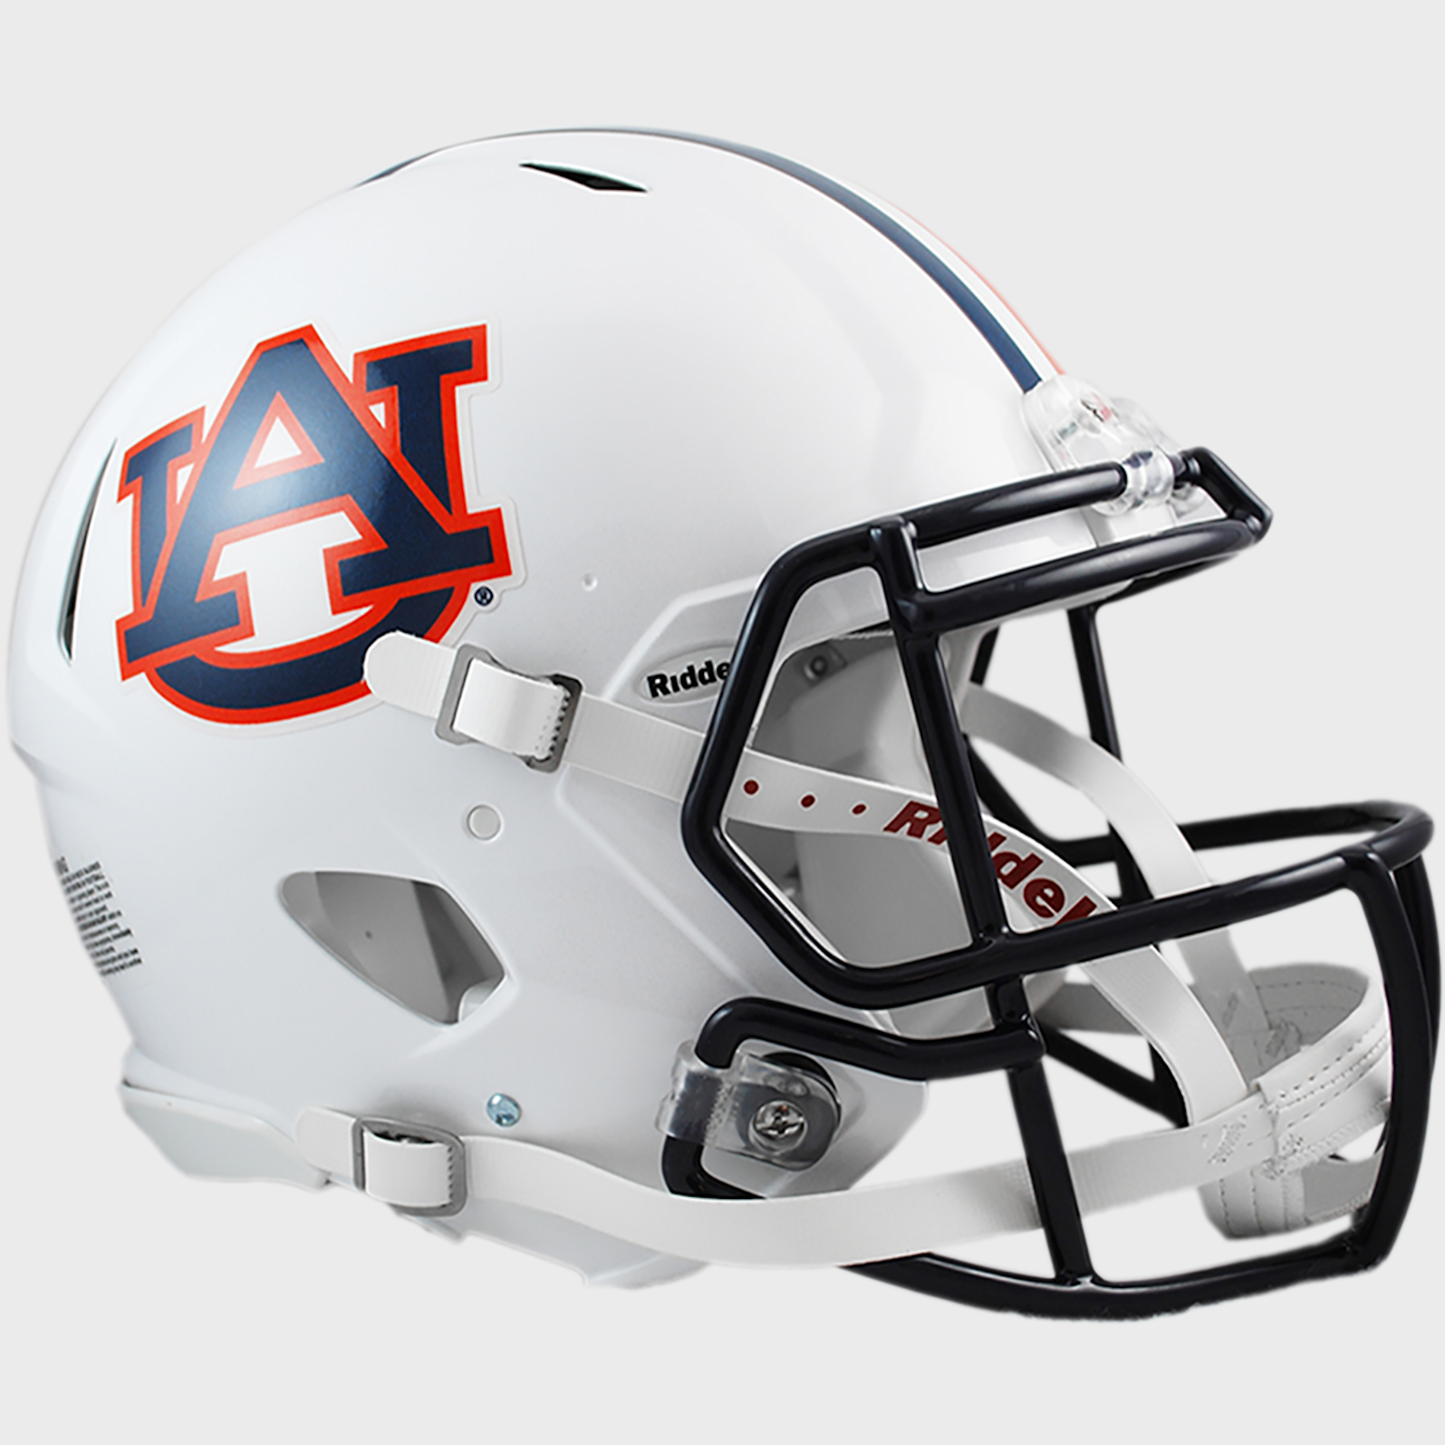 Auburn Tigers authentic full size helmet